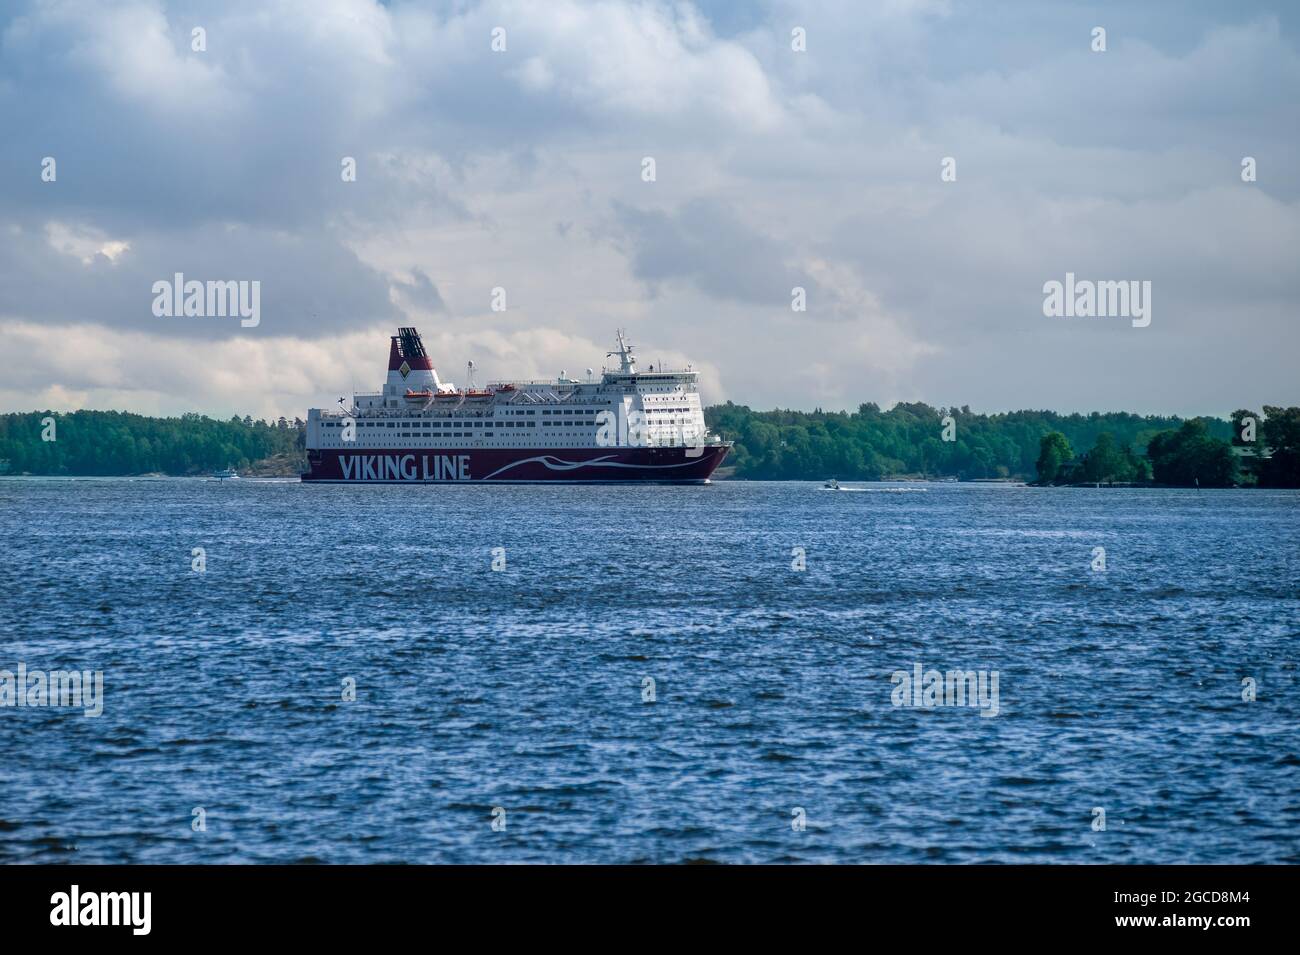 Helsinki / Finland - July 30, 2020: A large passenger RORO-ferry MV Mariella, operated by Viking Line, making a hard turn in the Finnish archipelago. Stock Photo